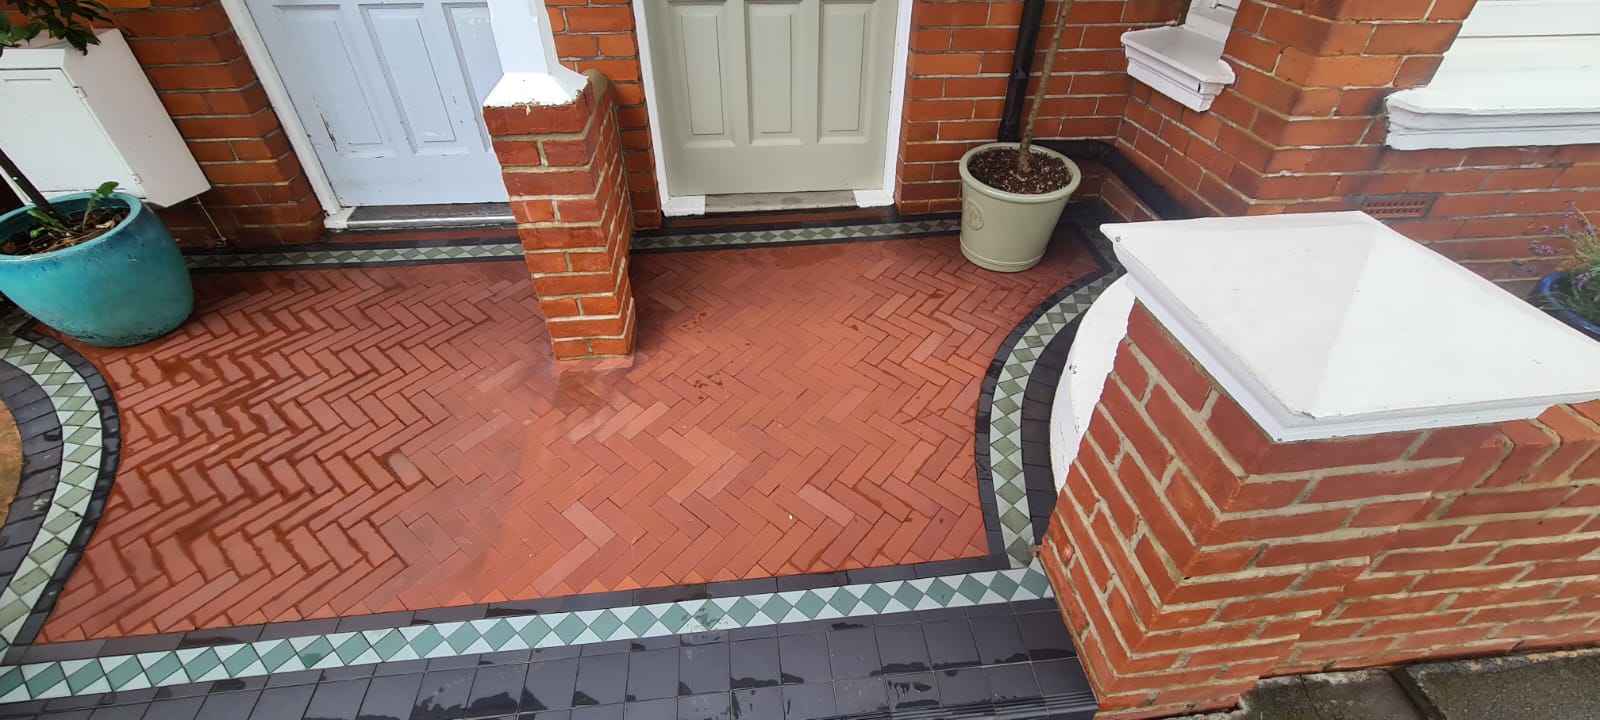 Cleaned Brick Tiles